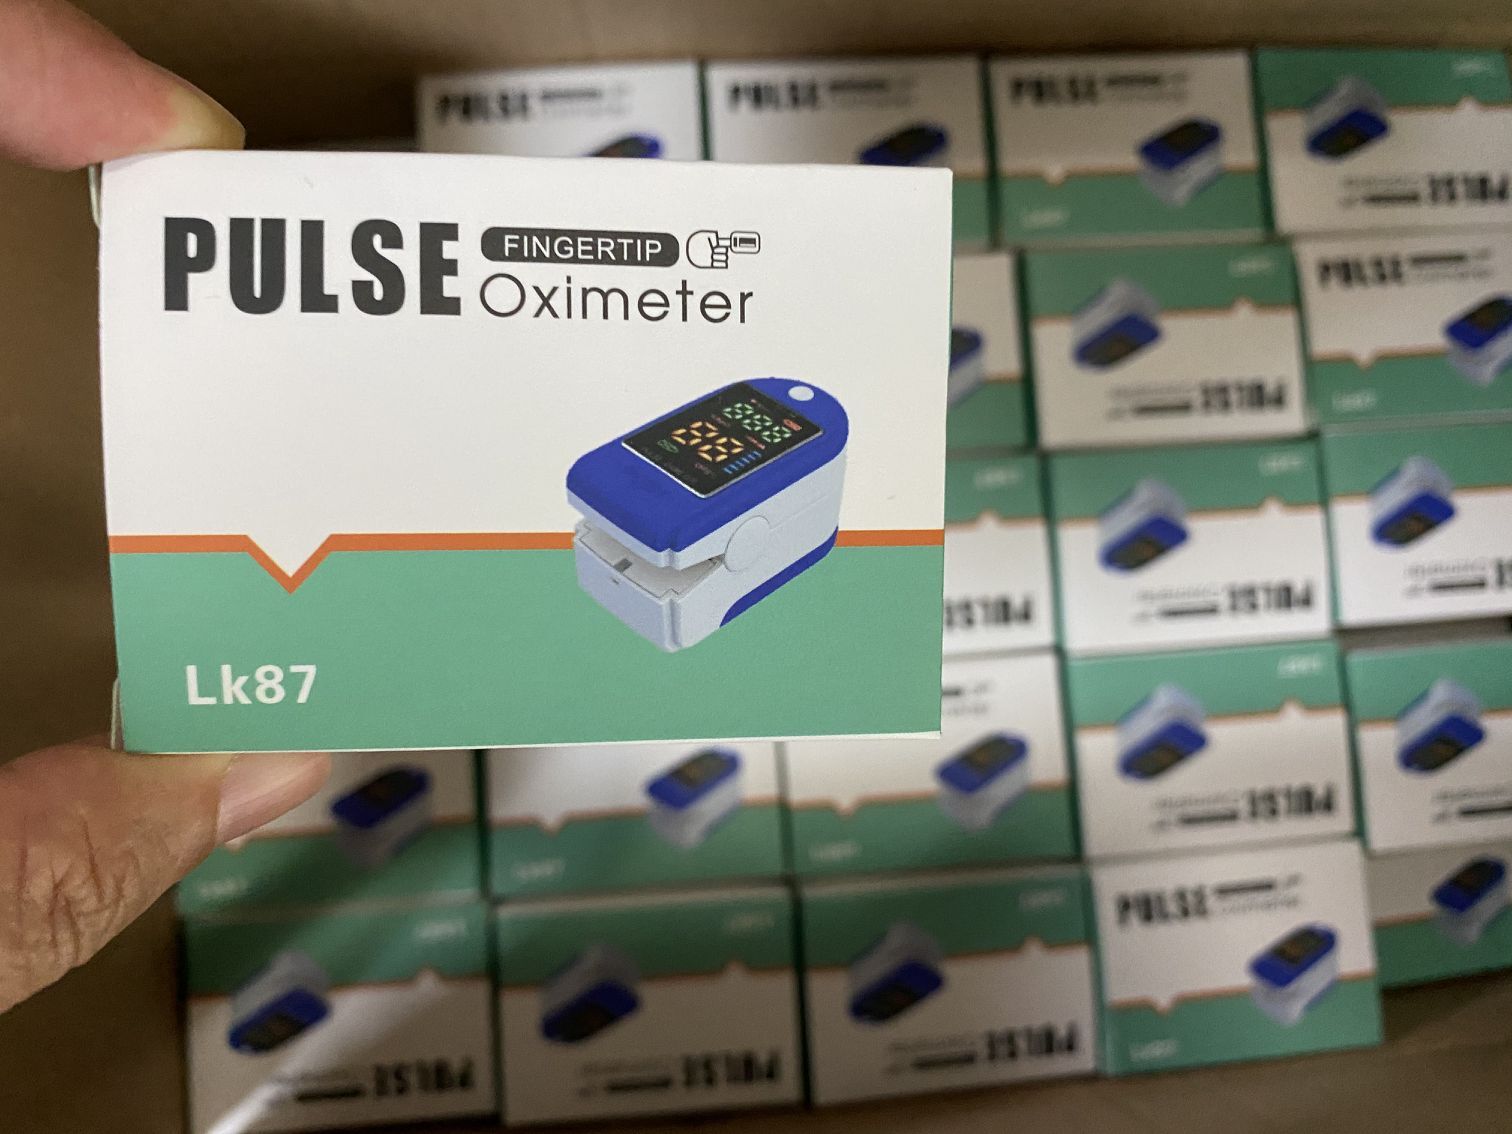 Spo2 pulse Oximeter ce oxy meter